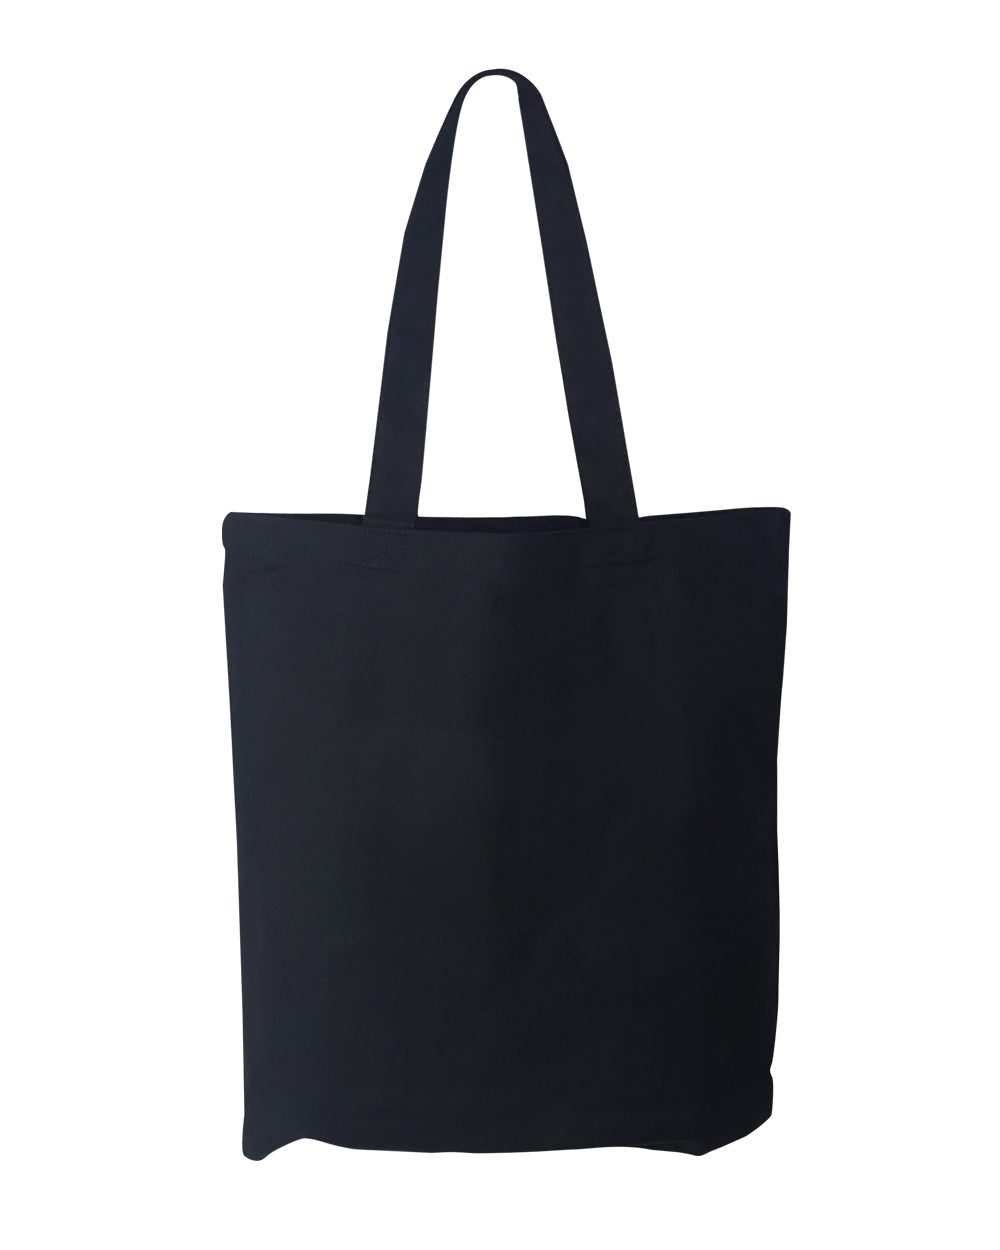 affordable cotton canvas tote bag tb111 black